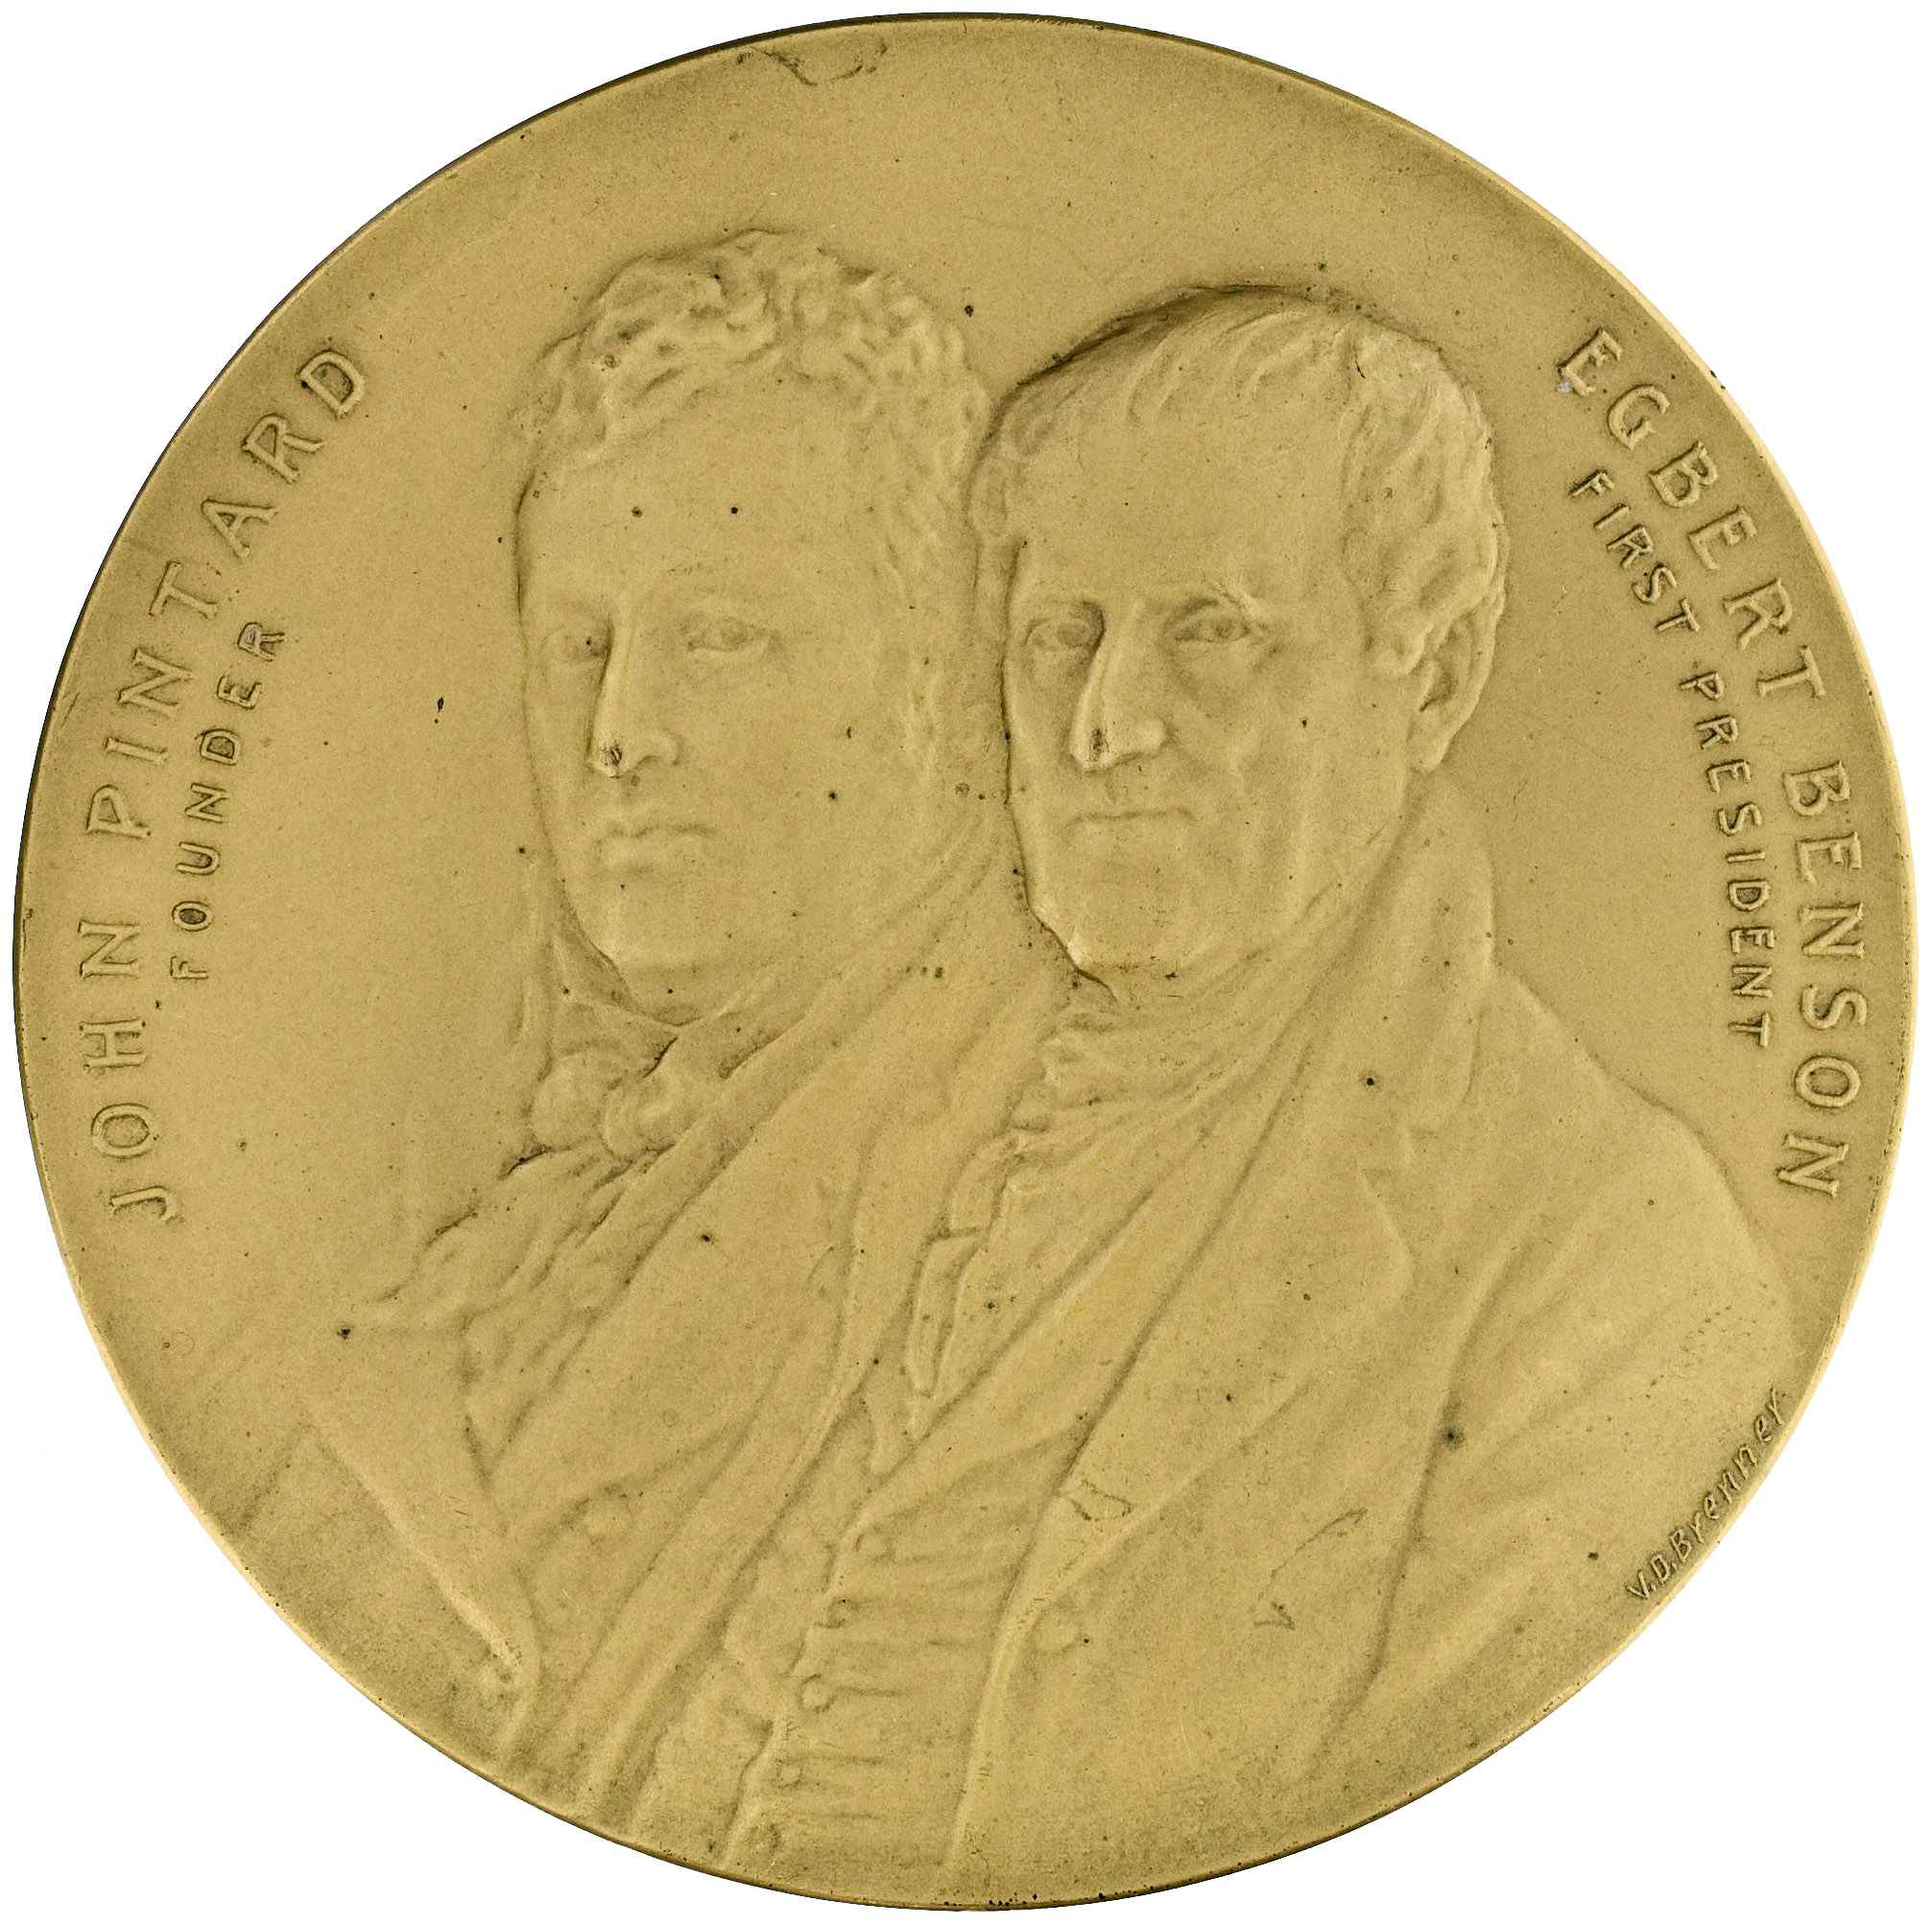 Hahlo-104, New York Historical Society medal